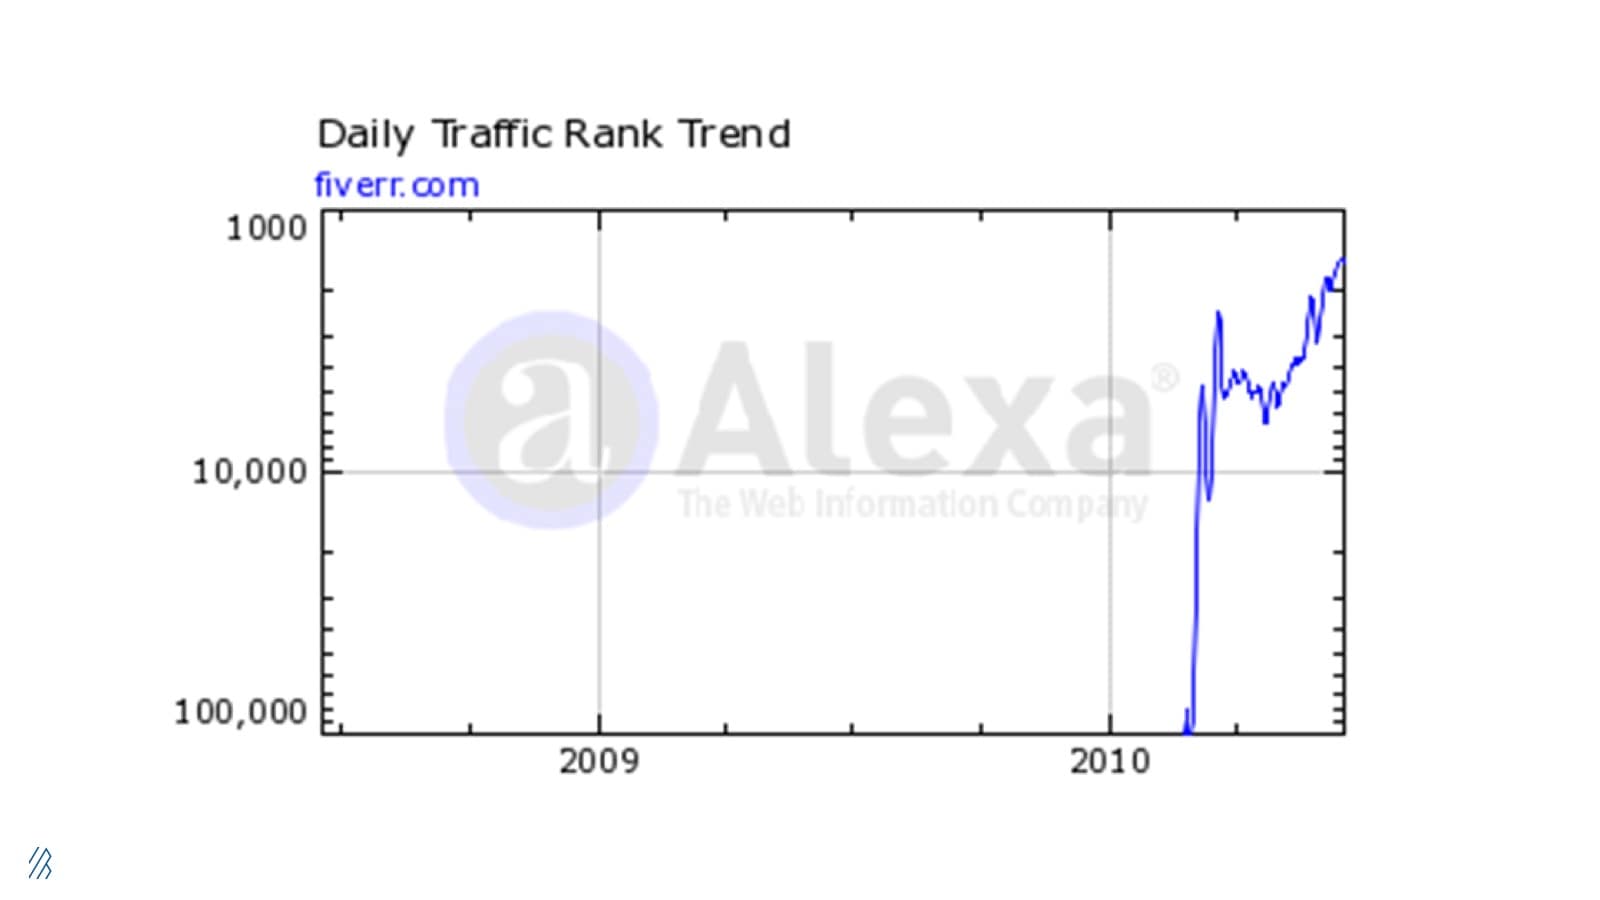 Alexa data of Fiverr's daily traffic rank trend in 2010